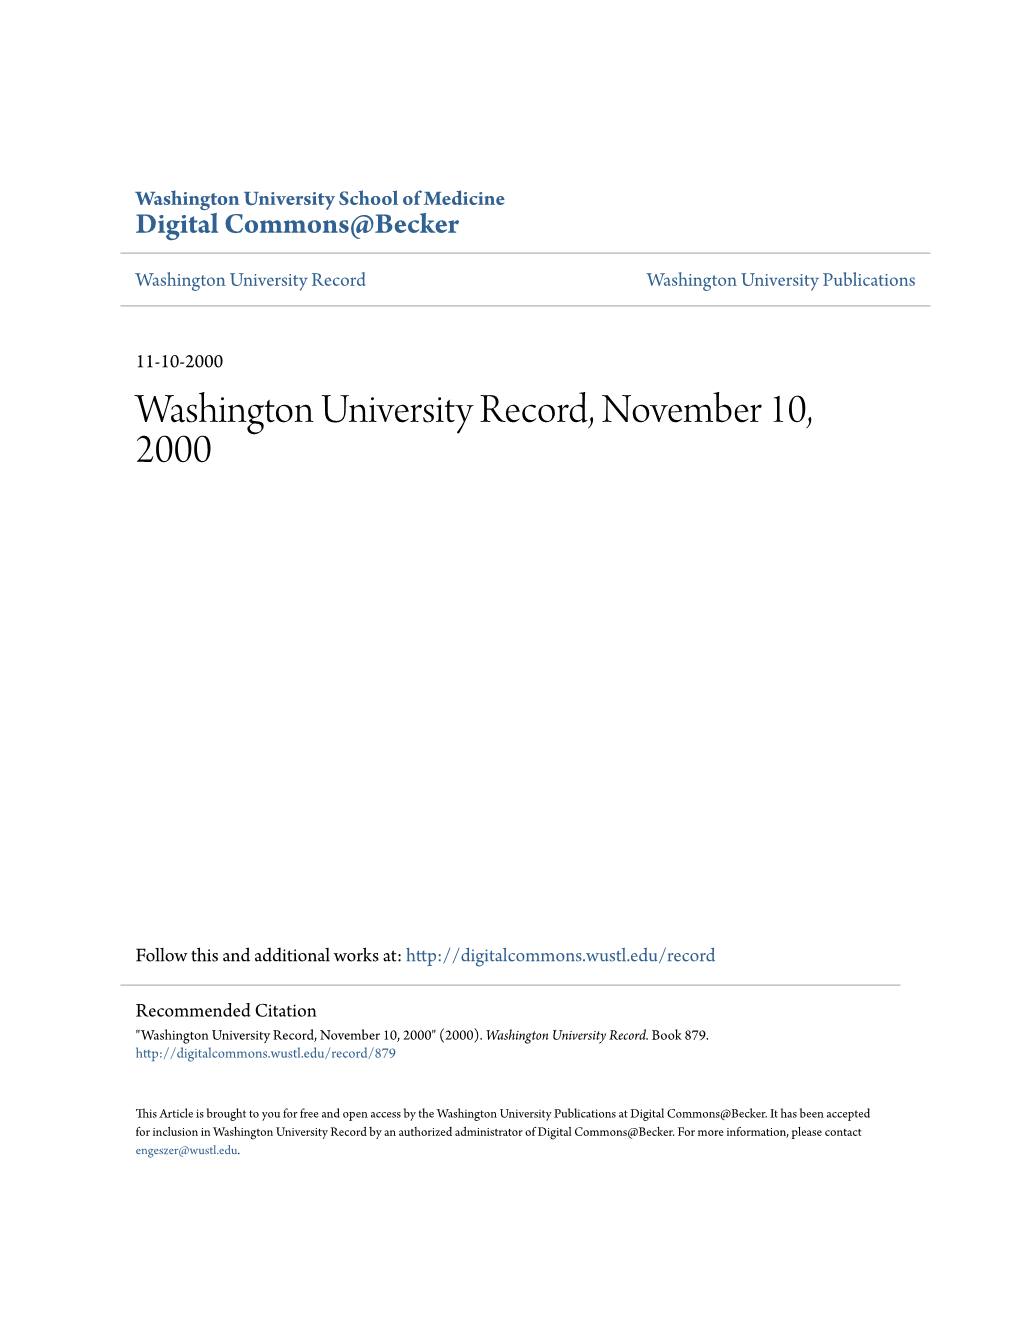 Washington University Record, November 10, 2000